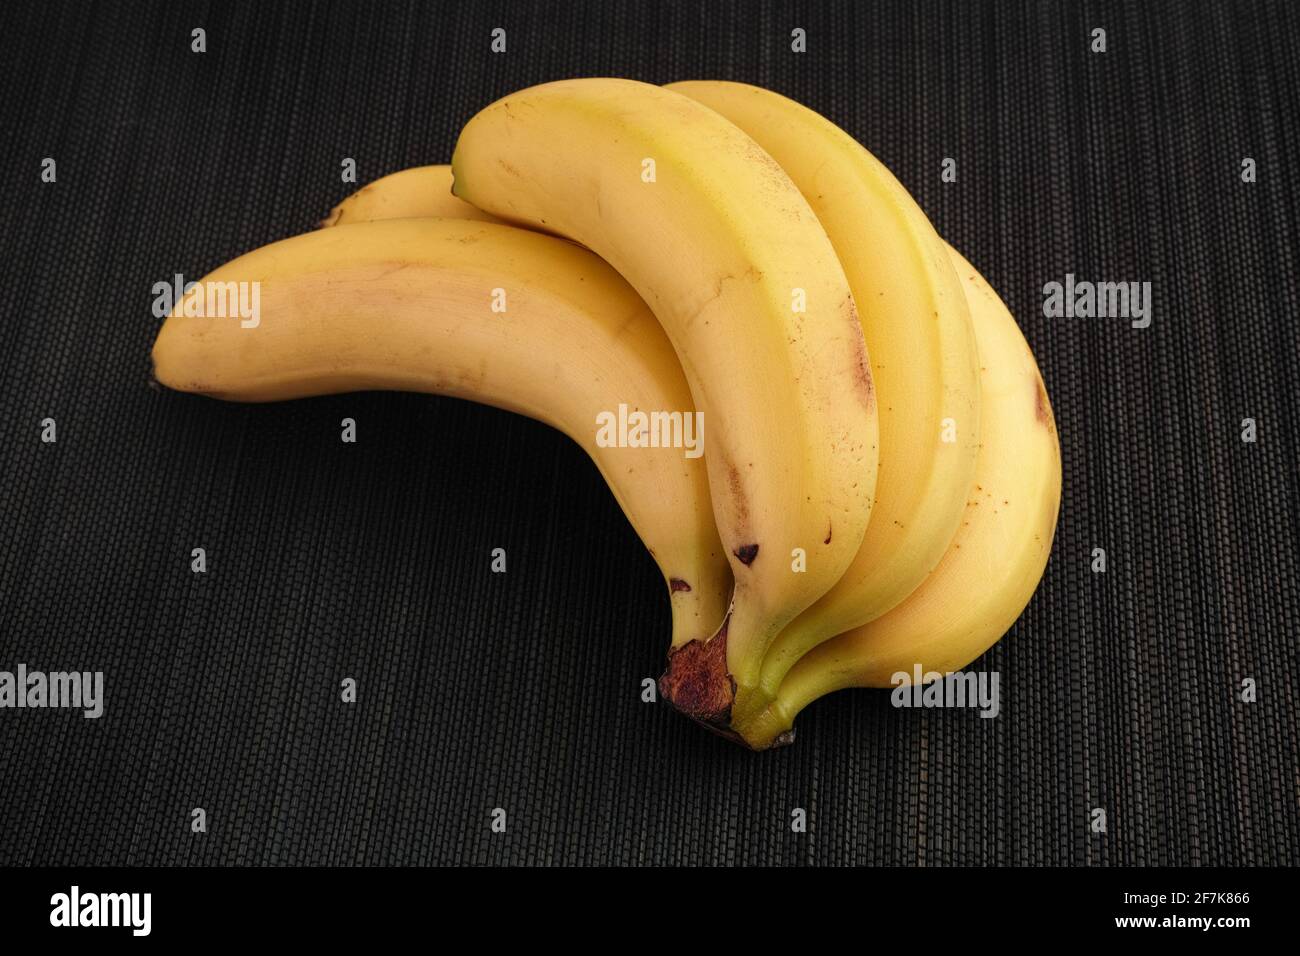 Bunch of bananas. Low key. Close up. Stock Photo